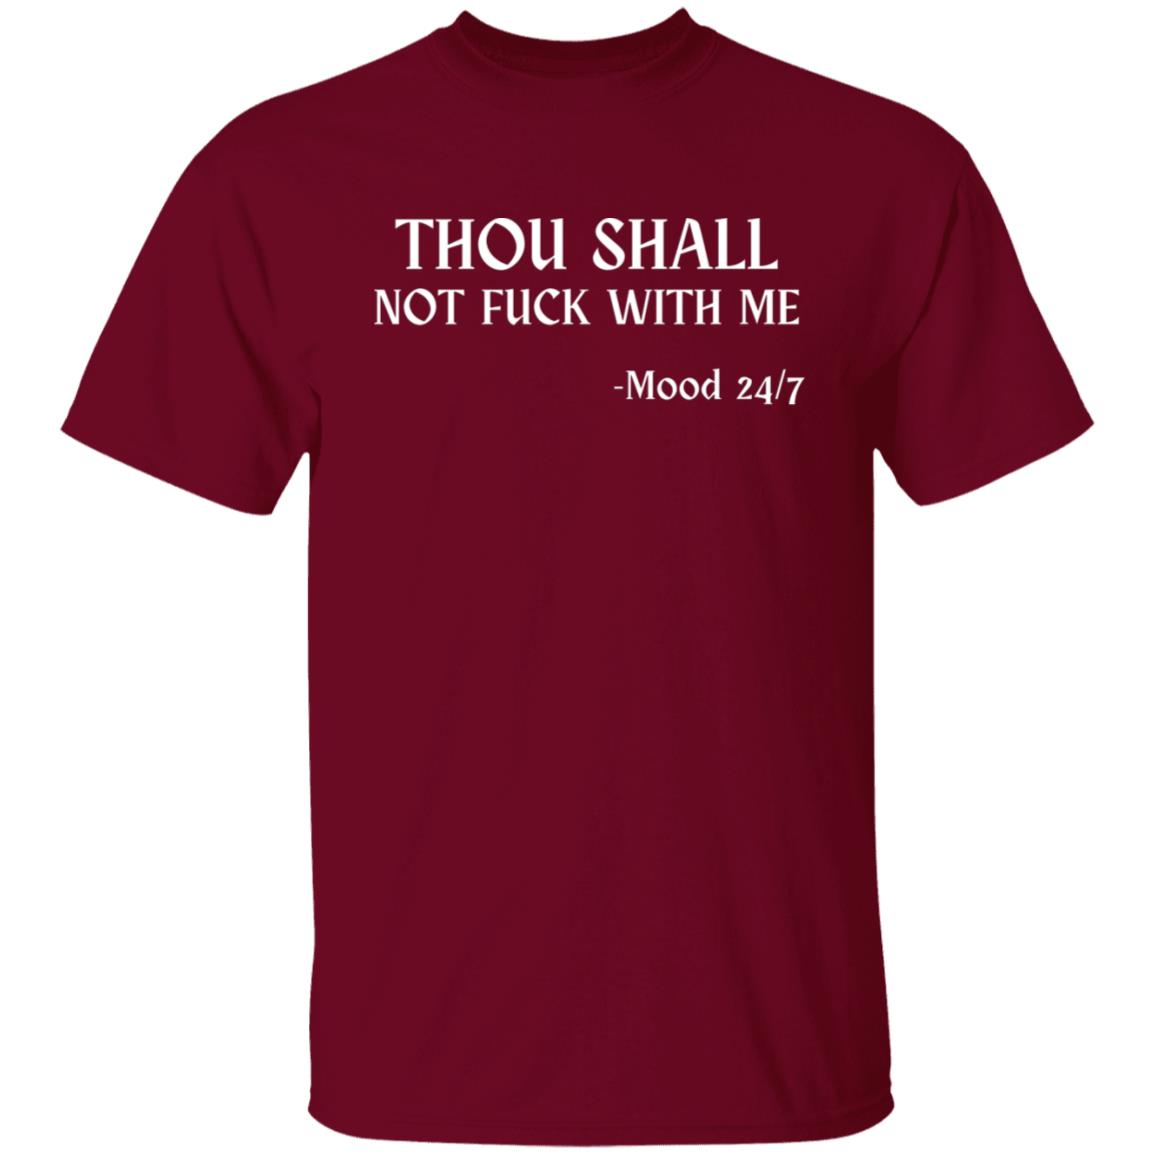 Ten Commandments Thou Shall Not FU$K With Me Punk Rock Graphic T-Shirt